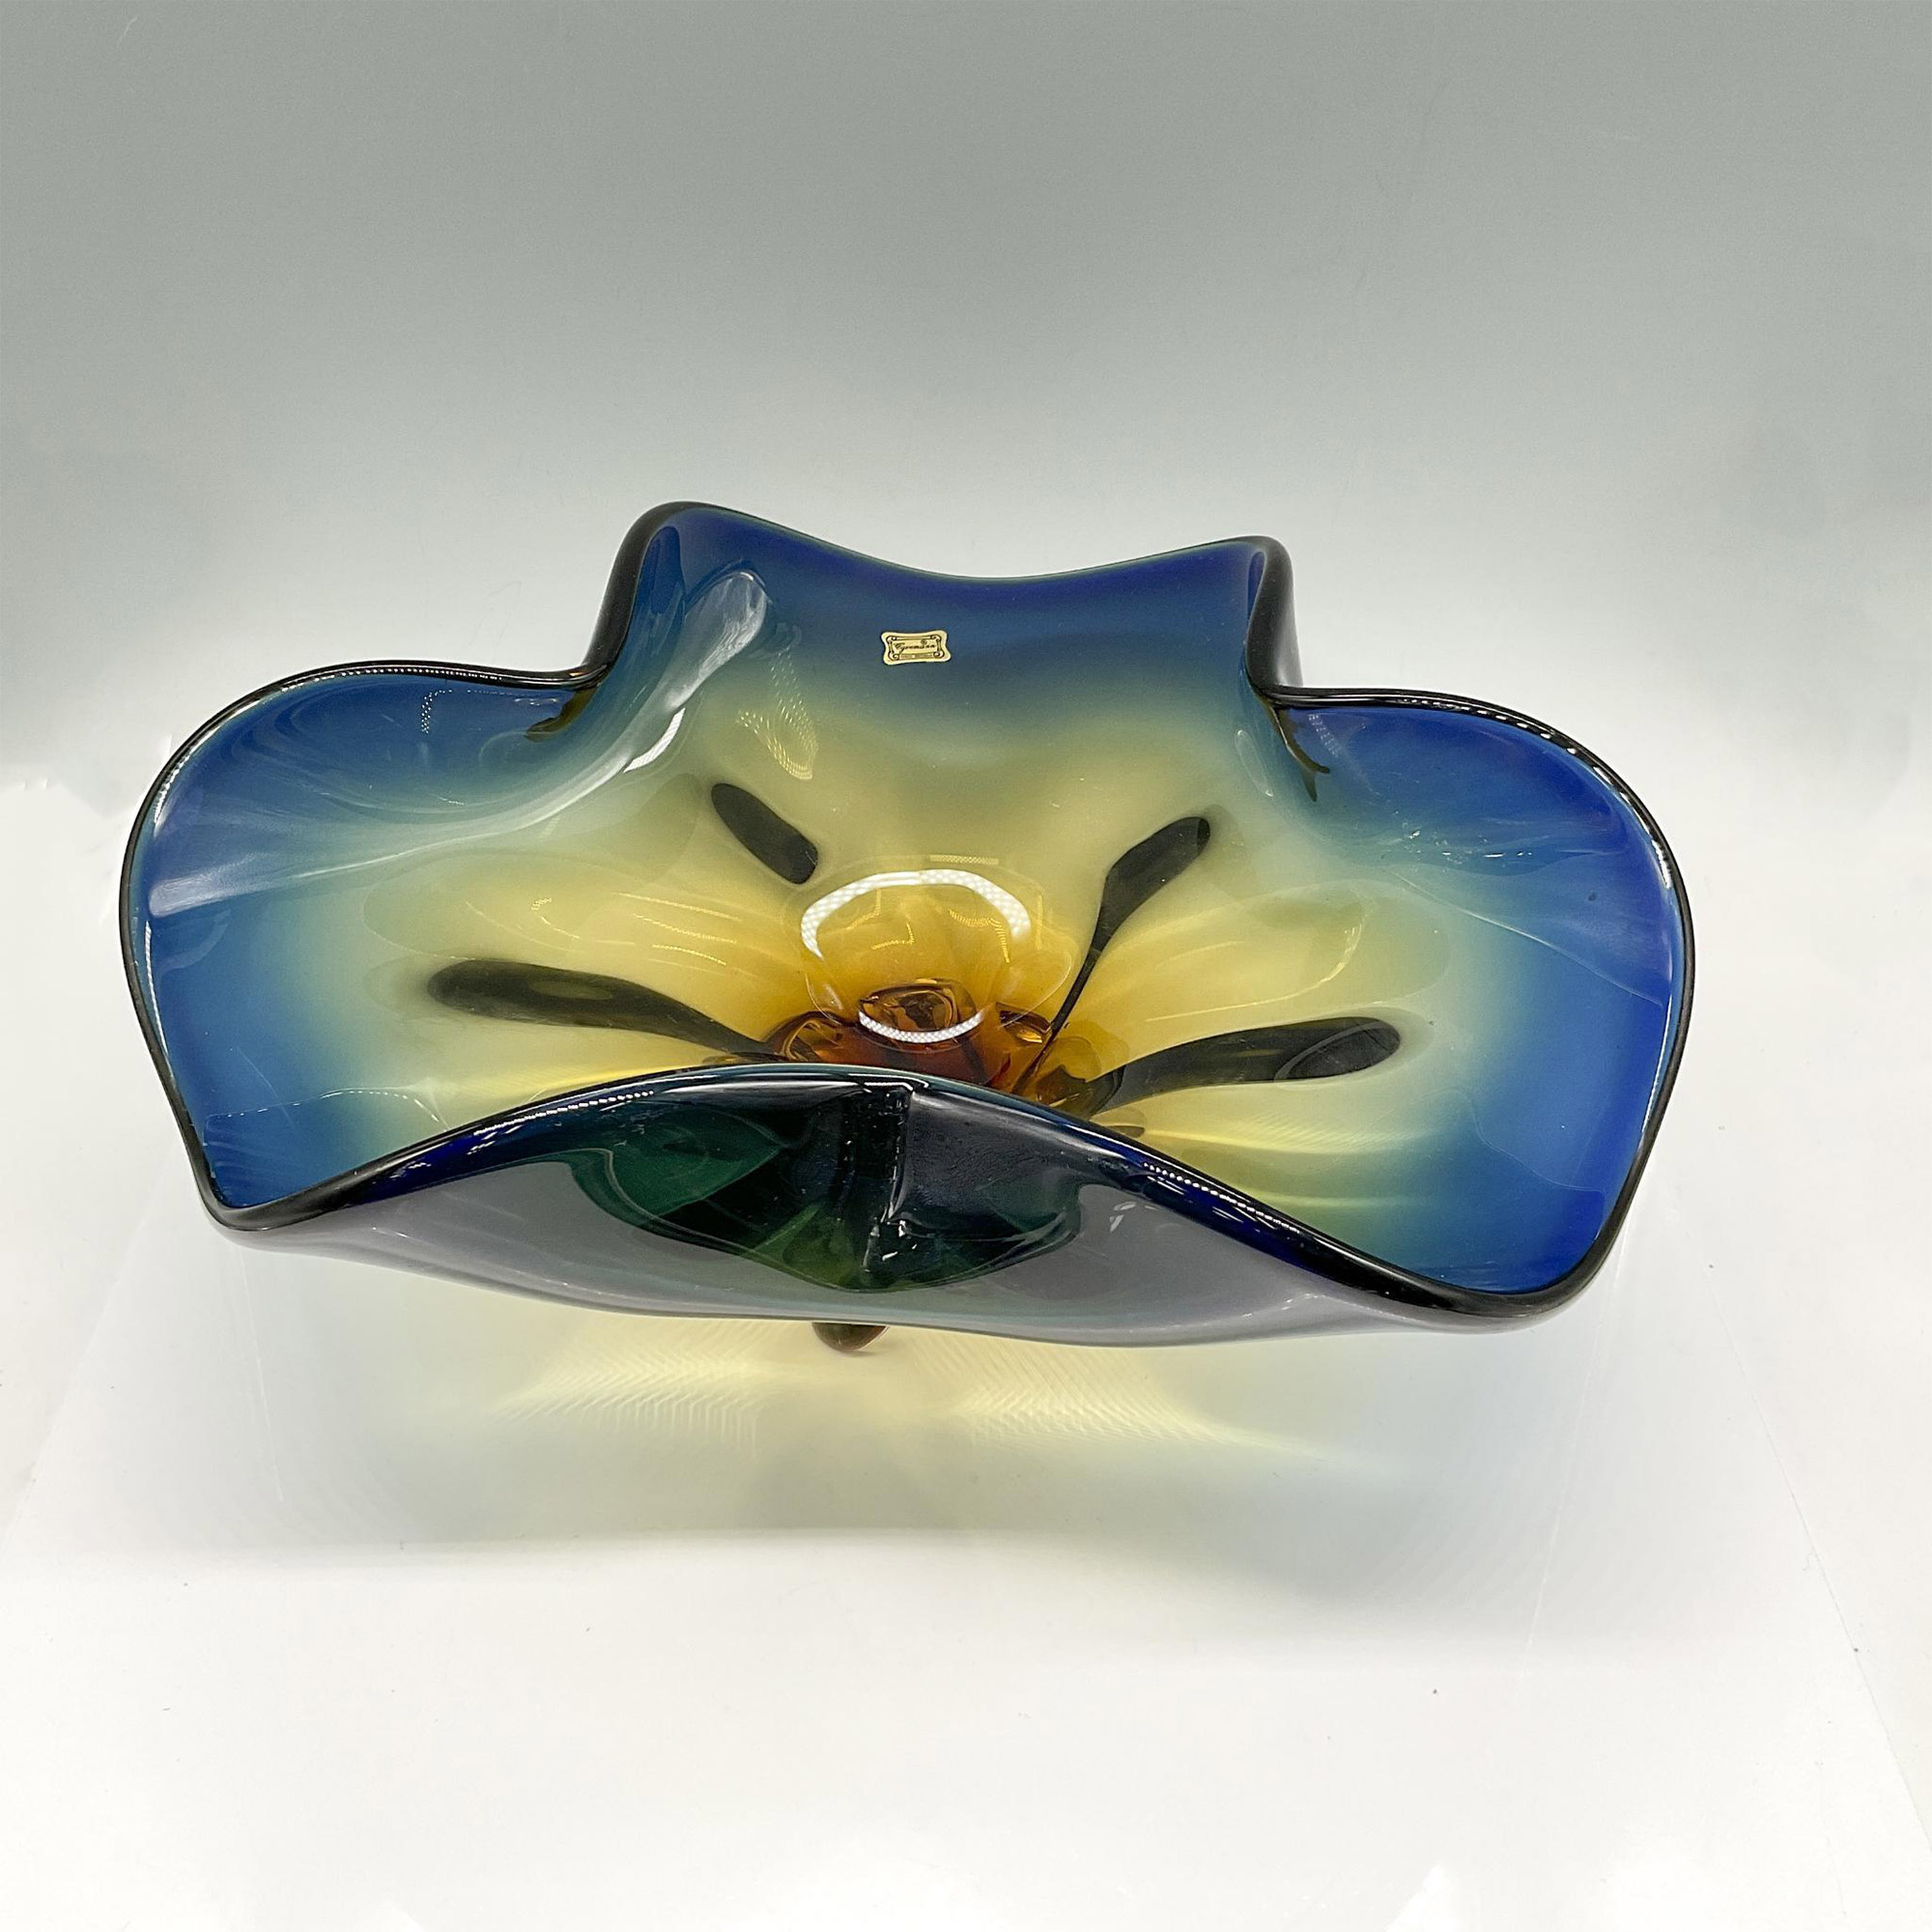 Egermann Bohemian Art Glass Centerpiece Bowl - Image 2 of 4